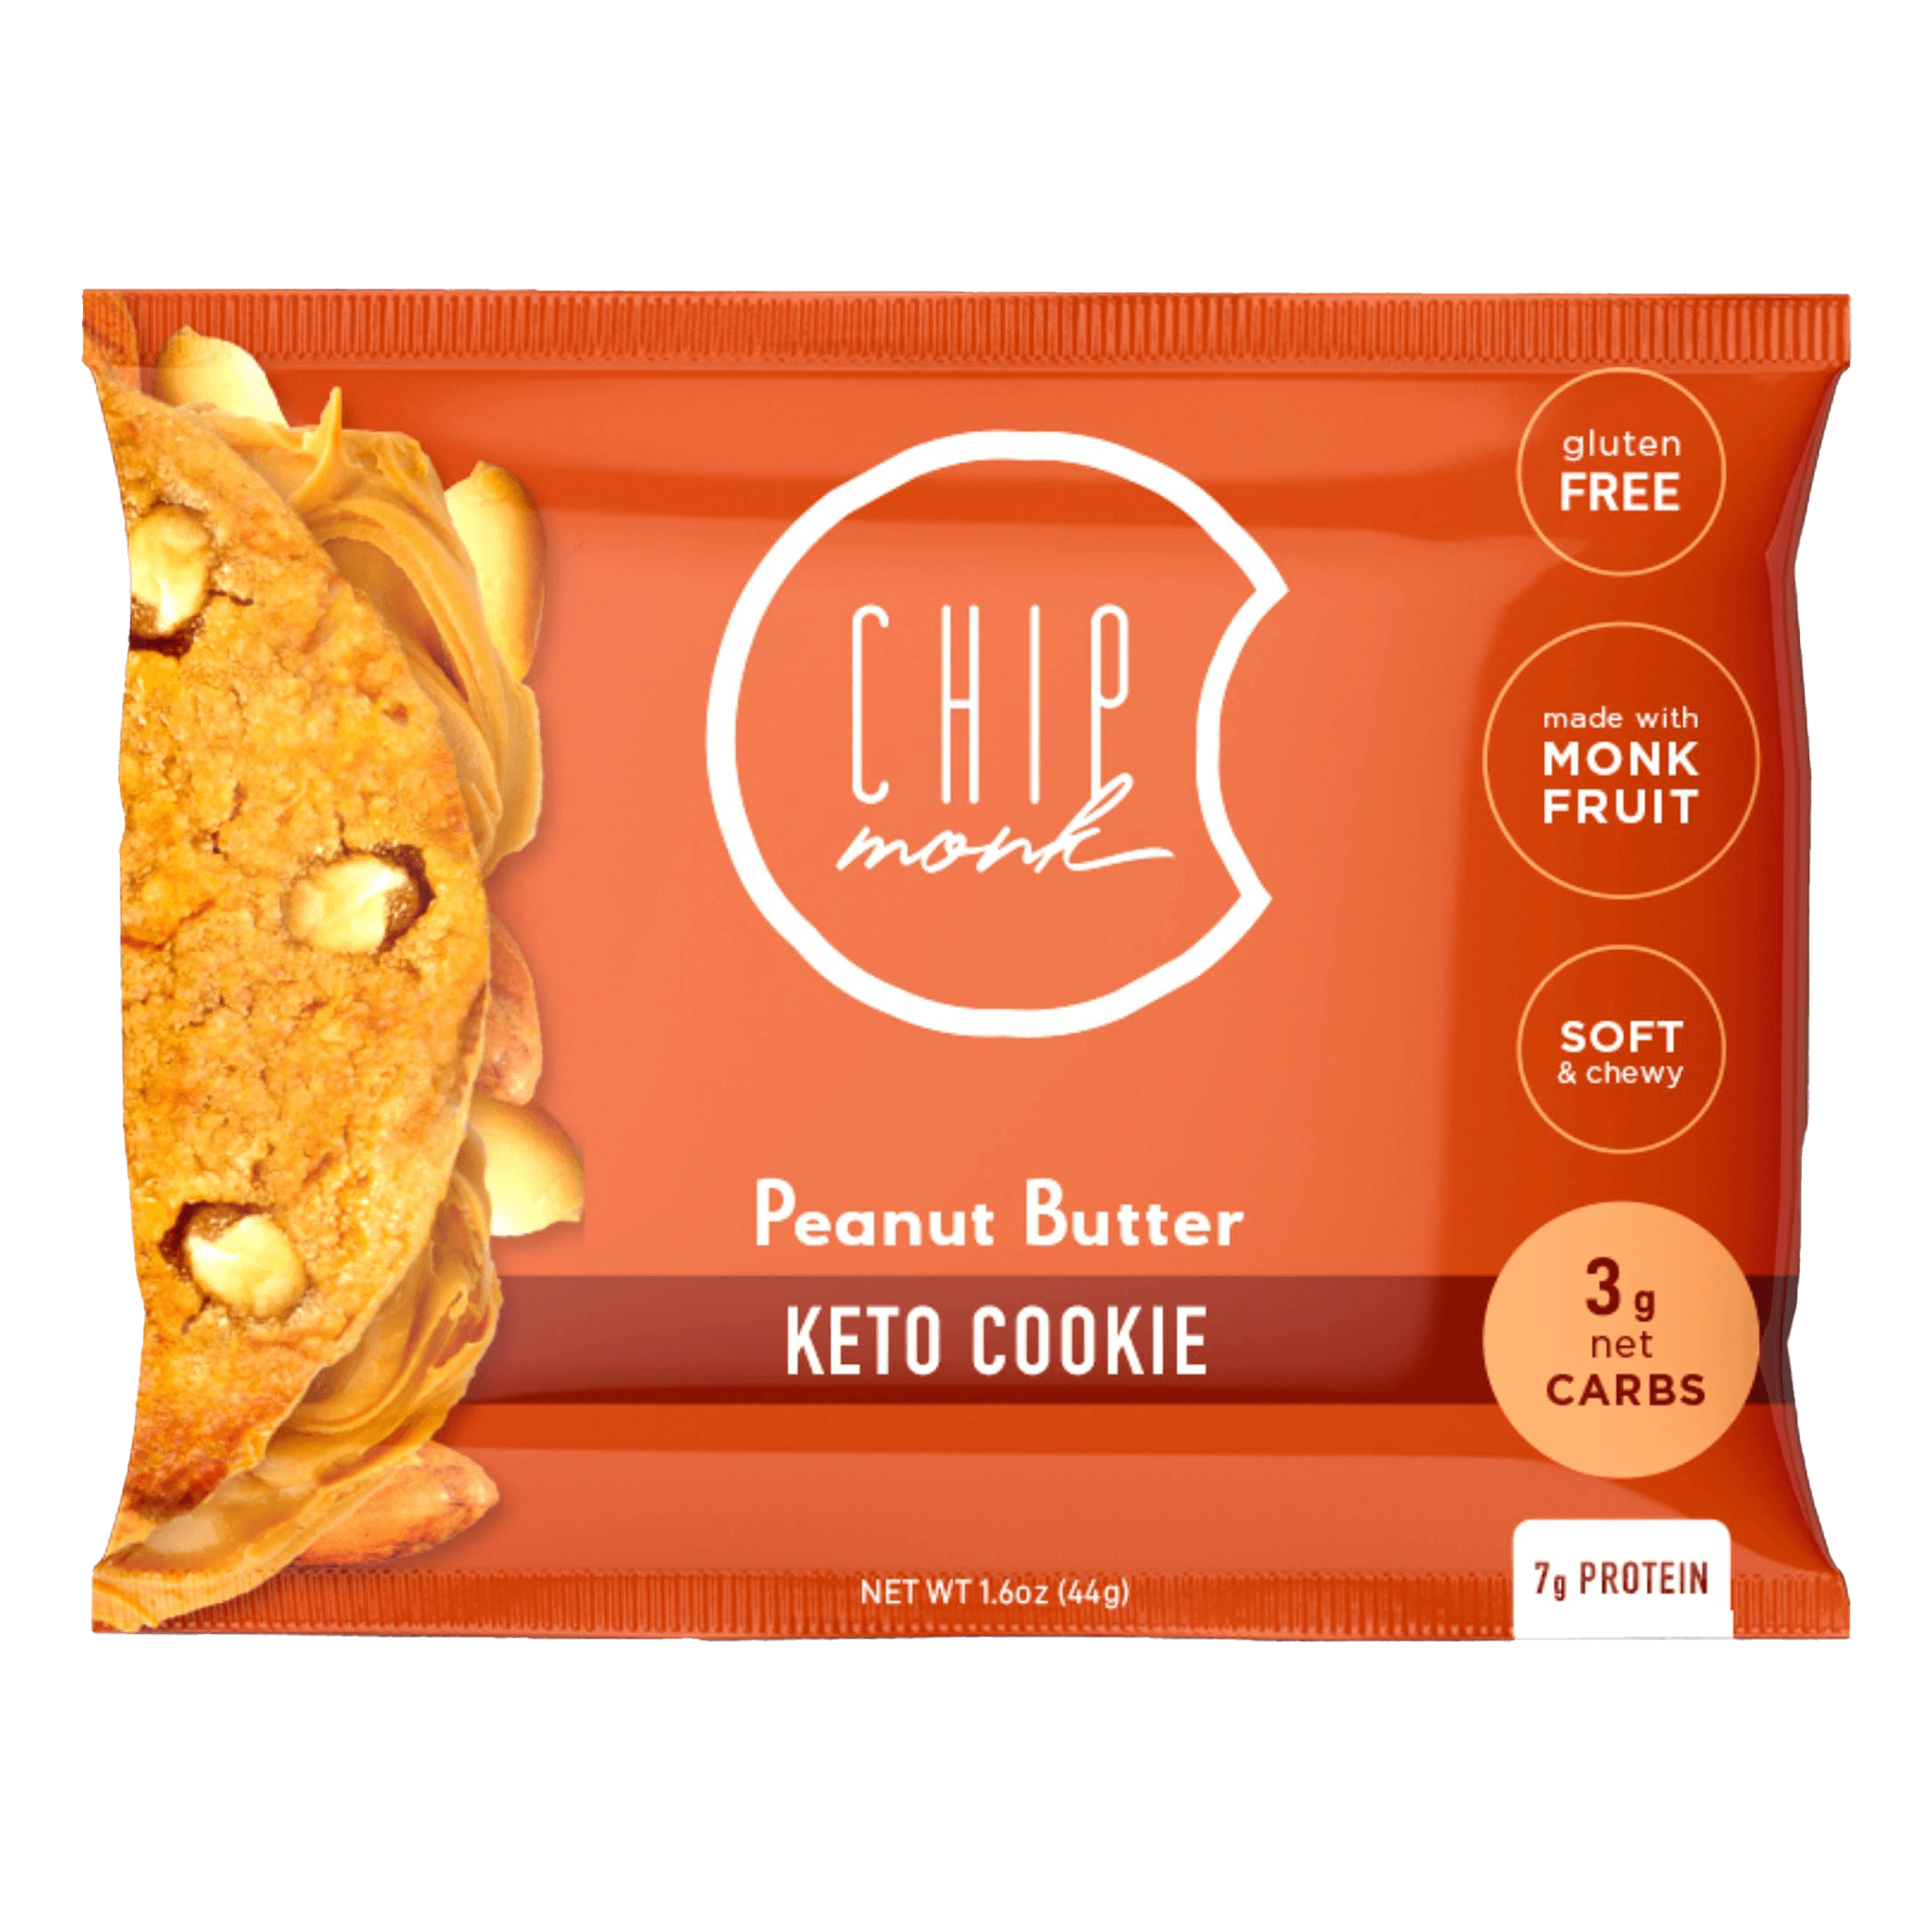 Peanut Butter Keto Cookies - ChipMonk Baking - Consumerhaus